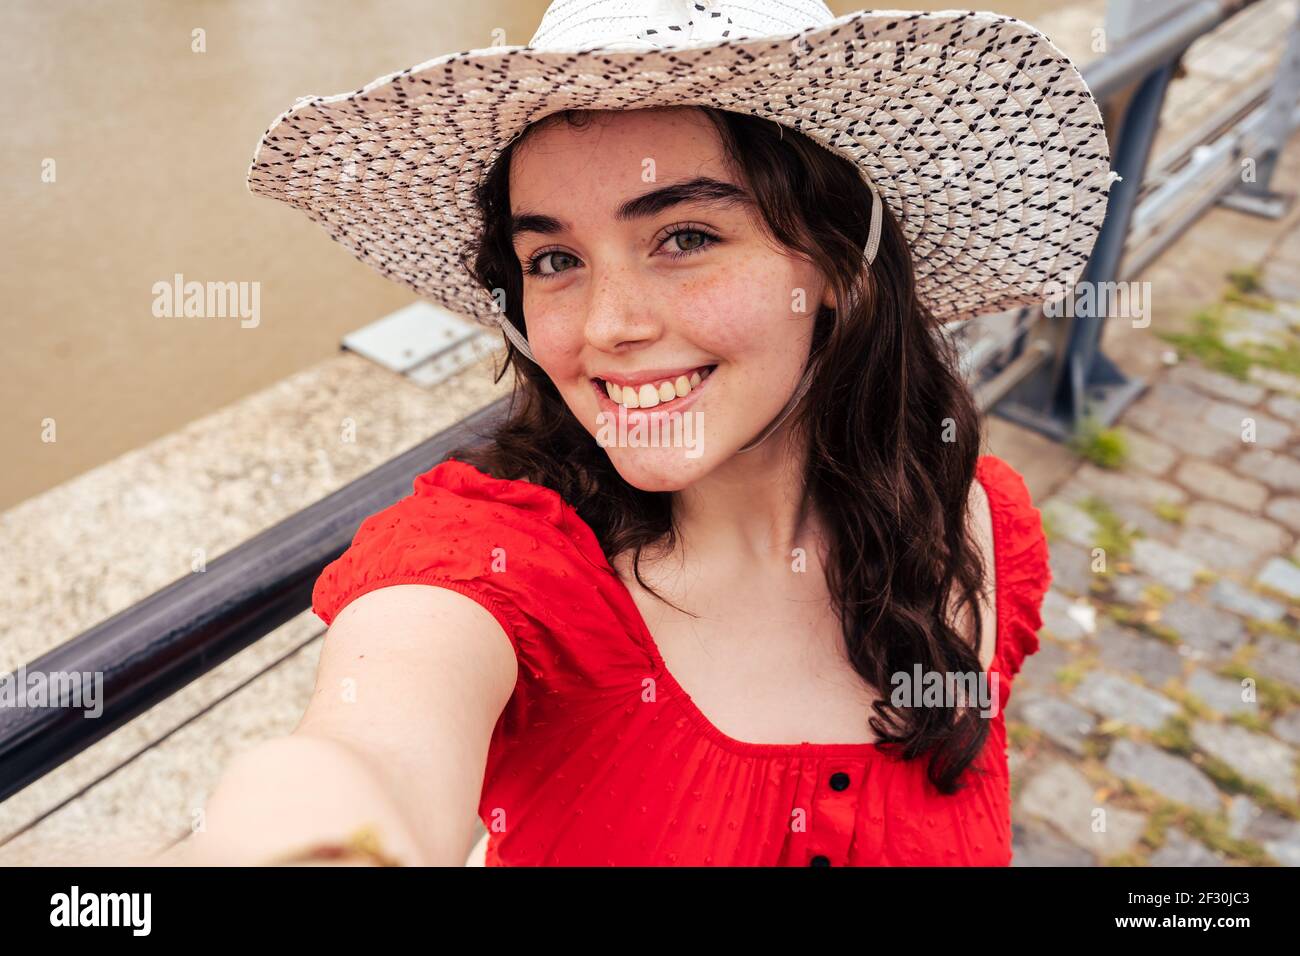 Latina Teen Woman Taking a Selfie. Concept socialmedia. Stock Photo